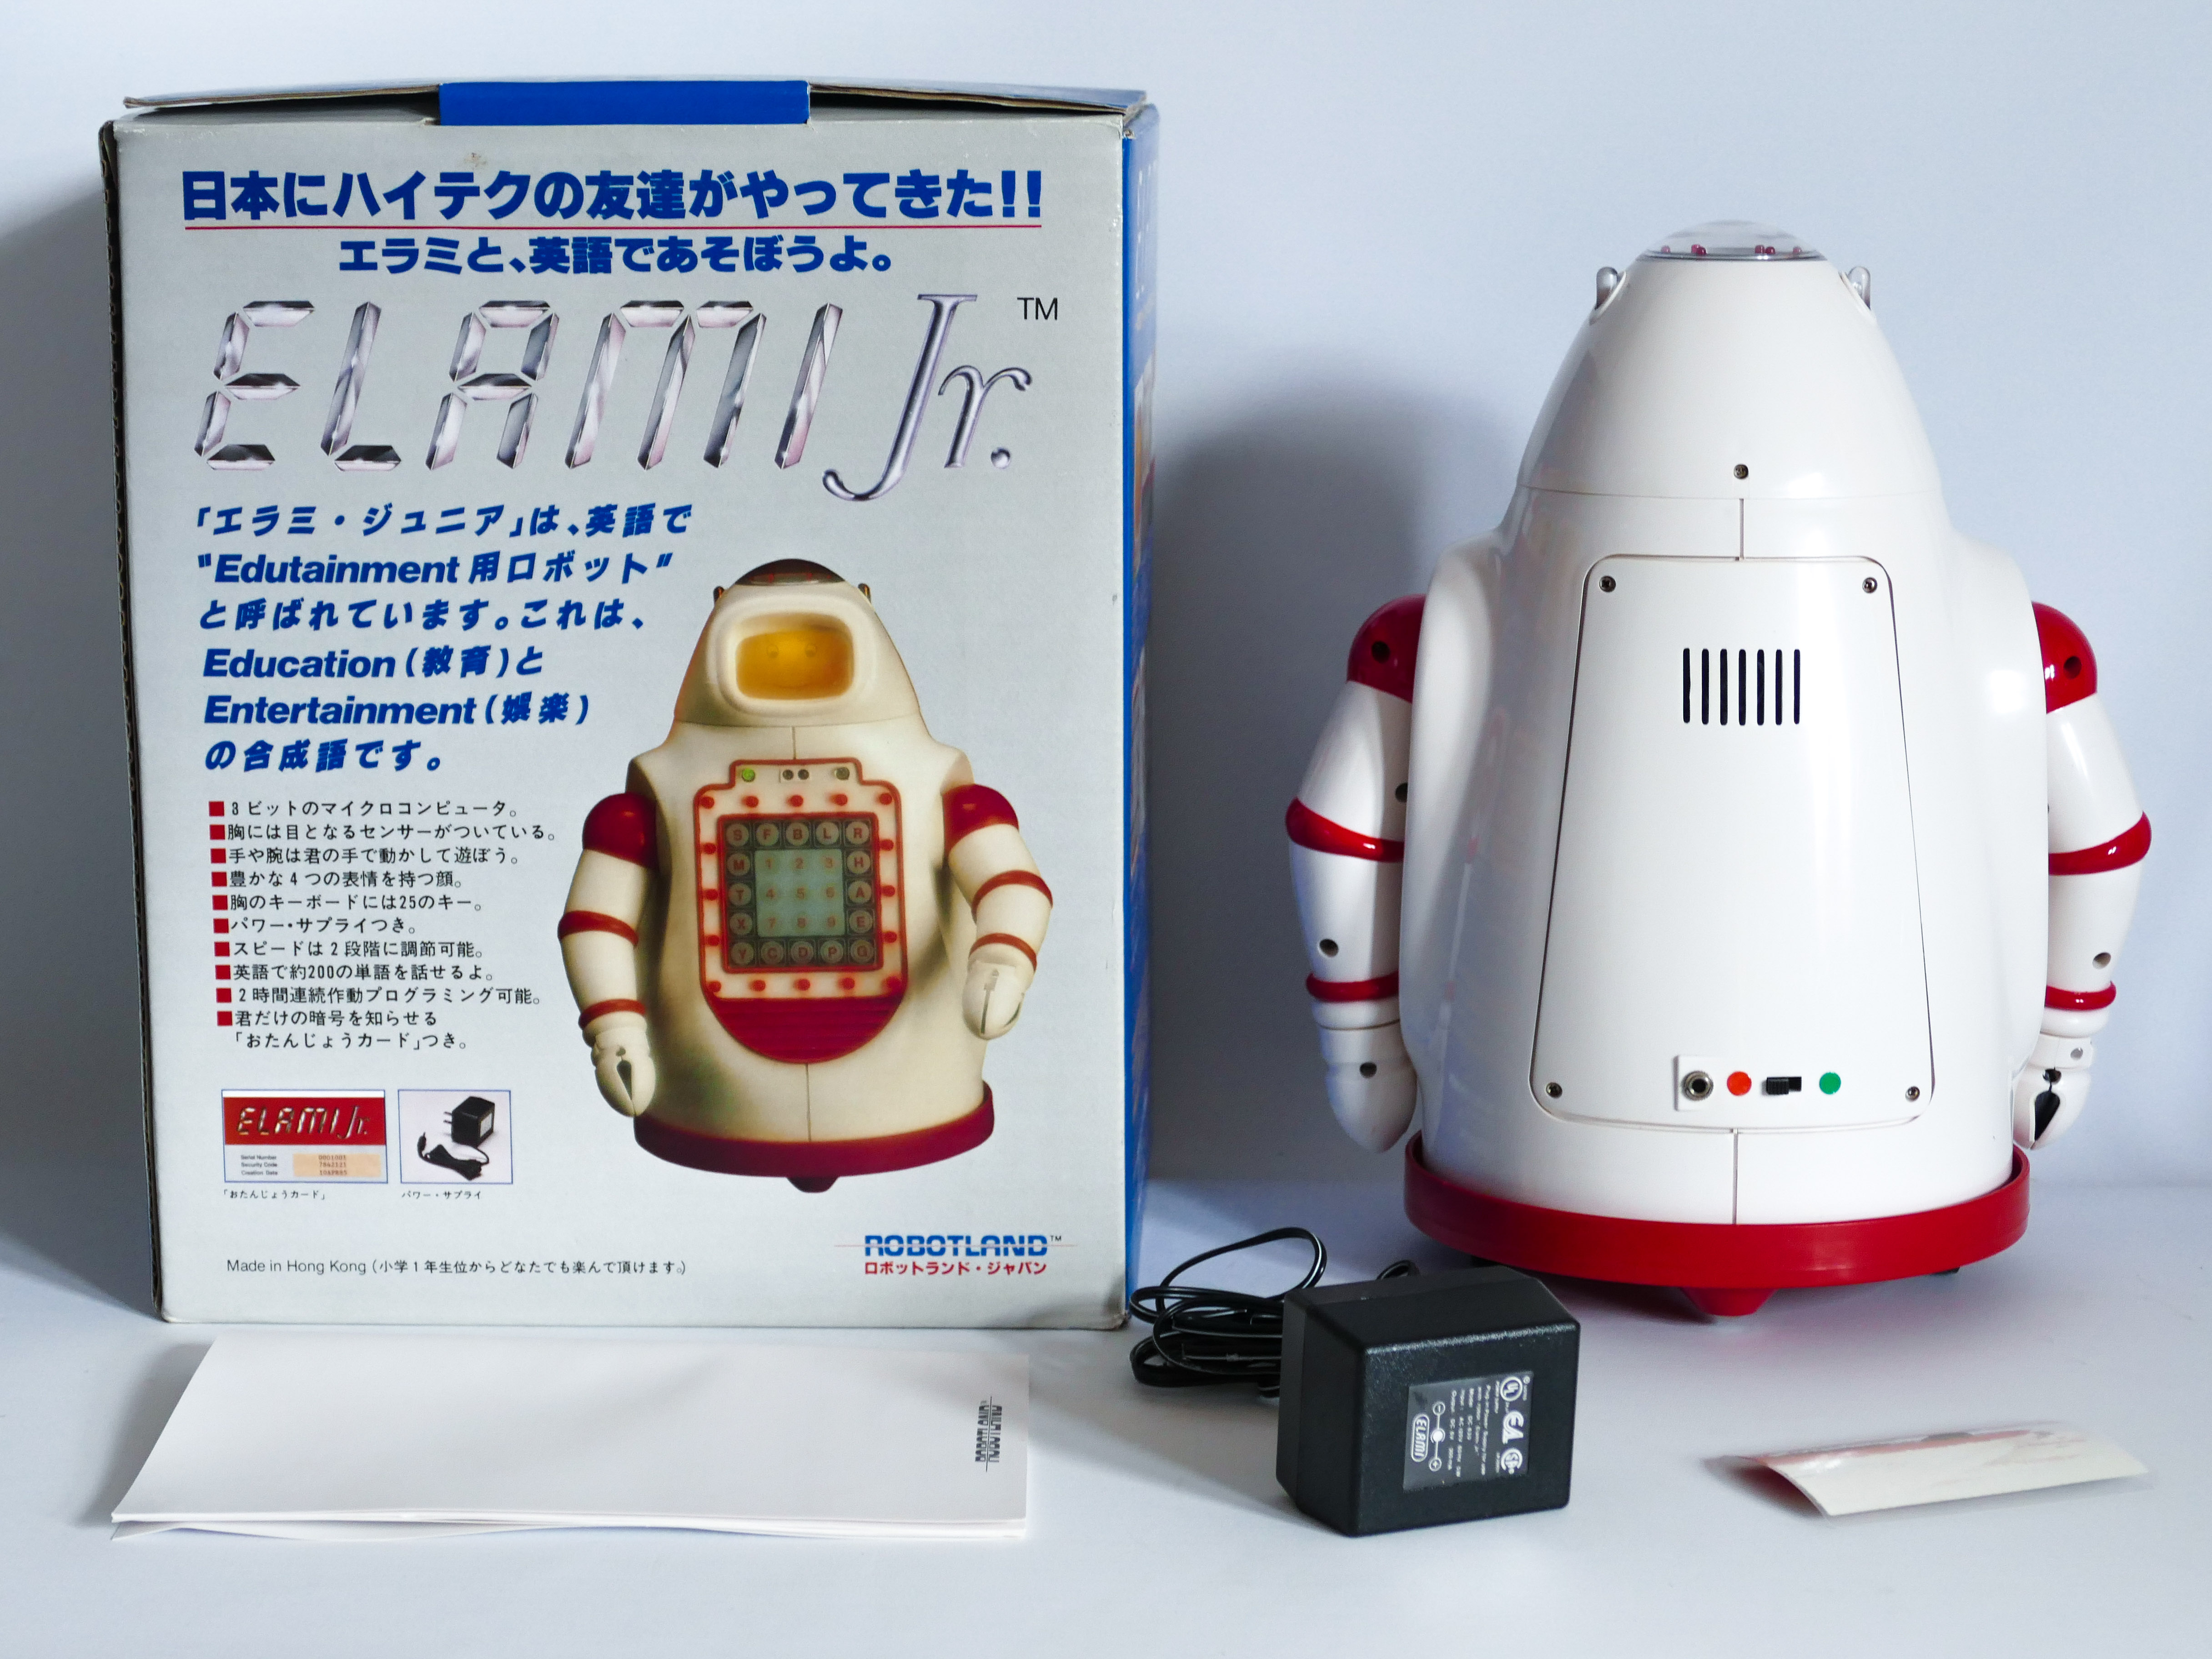 ROBOTLAND ELAMI JR. TOMY OMNIBOT VINTAGE RETRO SPACE TOY HOME PERSONAL COMPUTER ROBOT JAPAN - Image 2 of 3